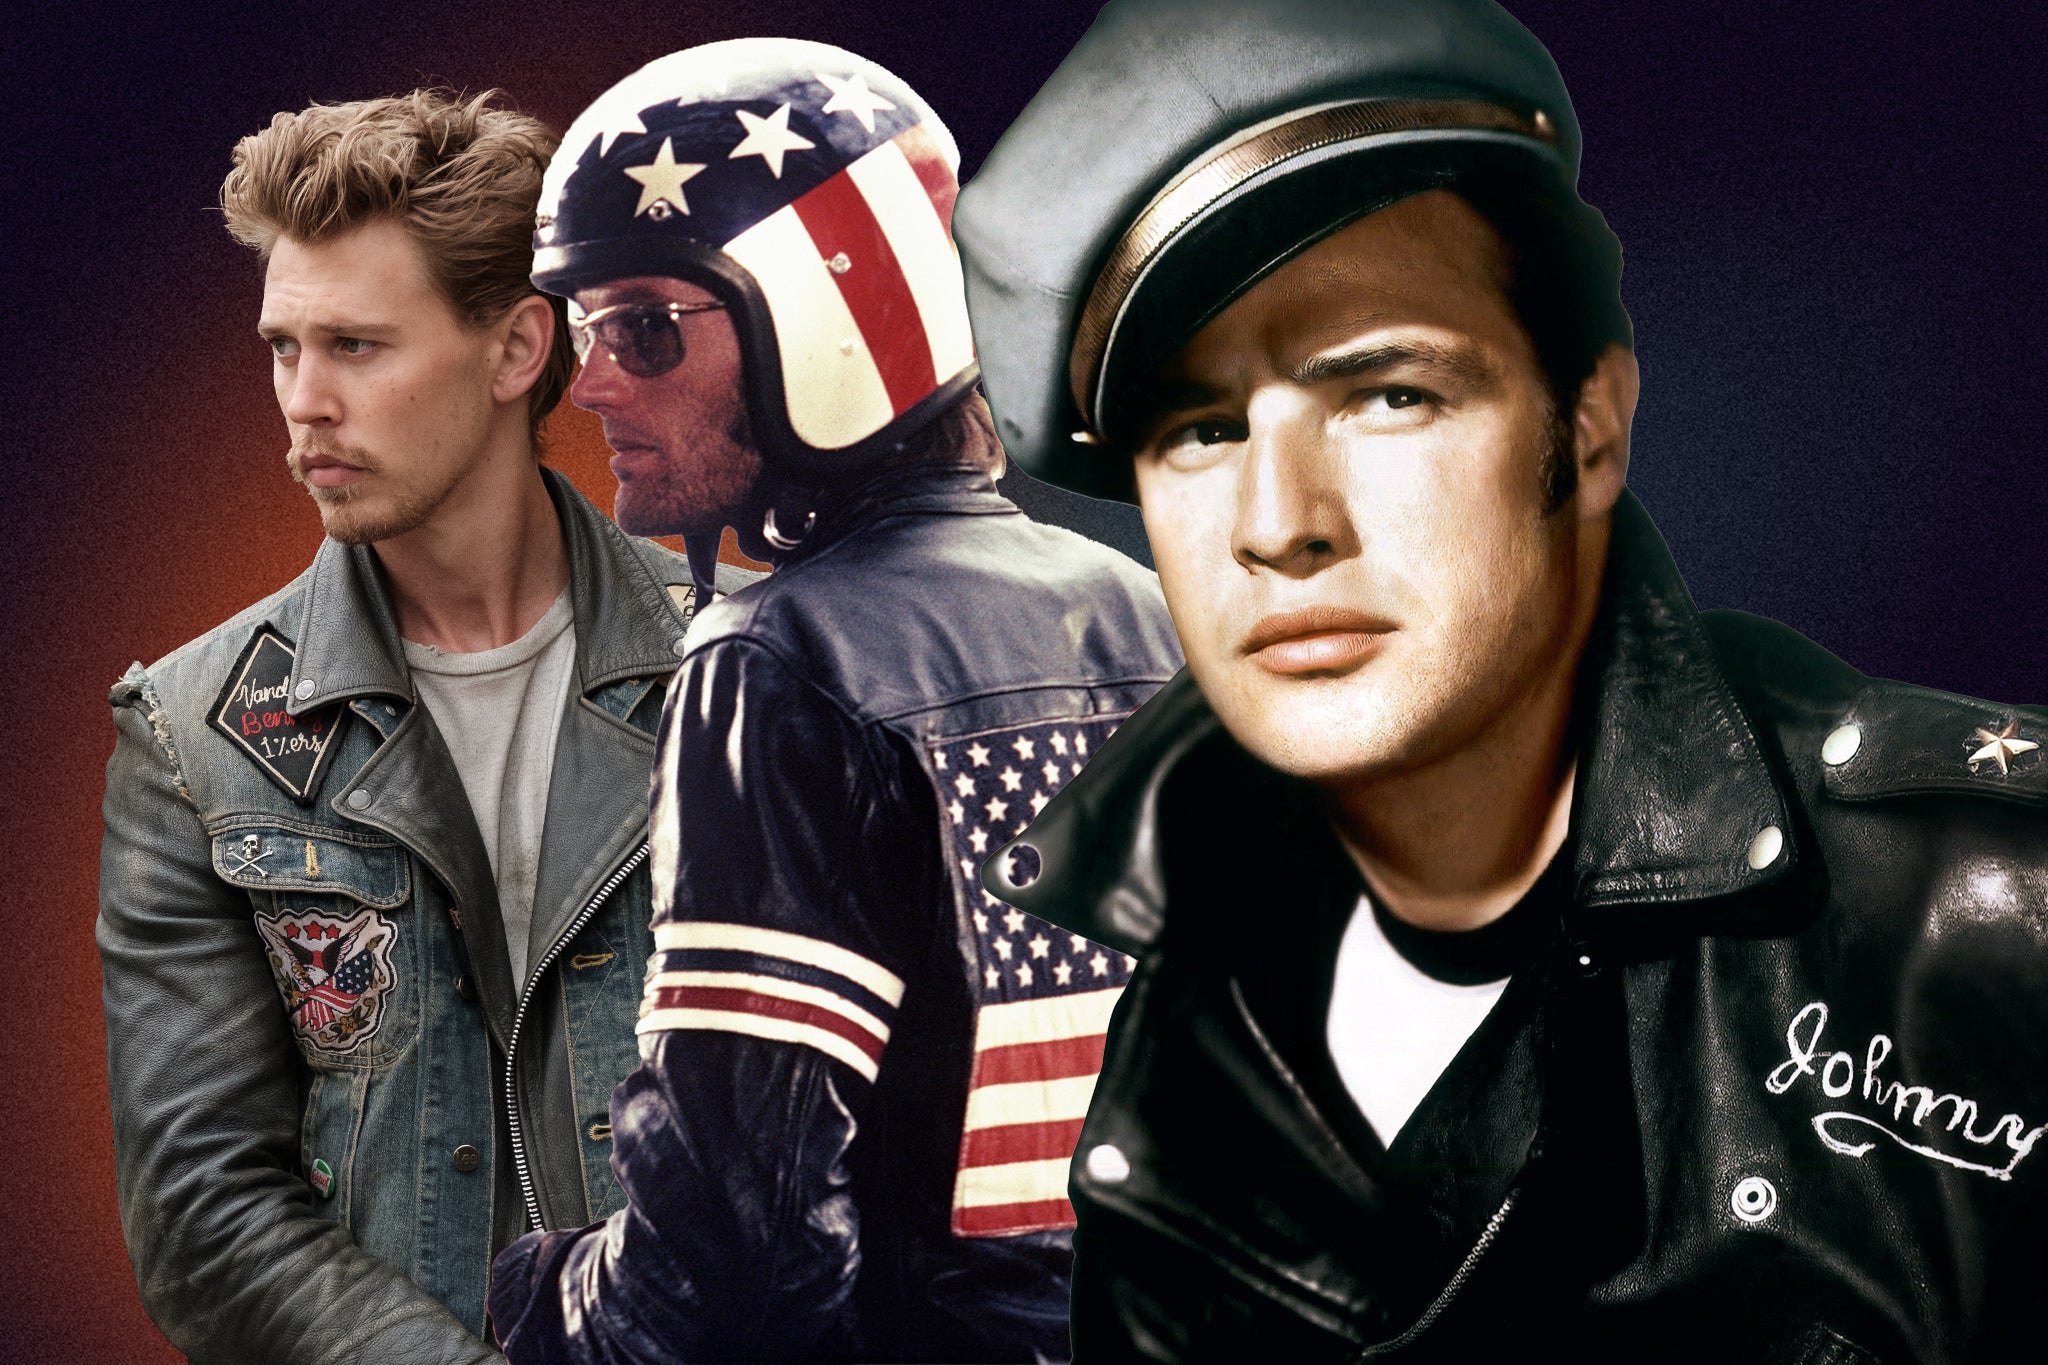 Cool riders: Austin Butler in ‘The Bikeriders’, Peter Fonda in ‘Easy Rider’, and Marlon Brando in ‘The Wild One’